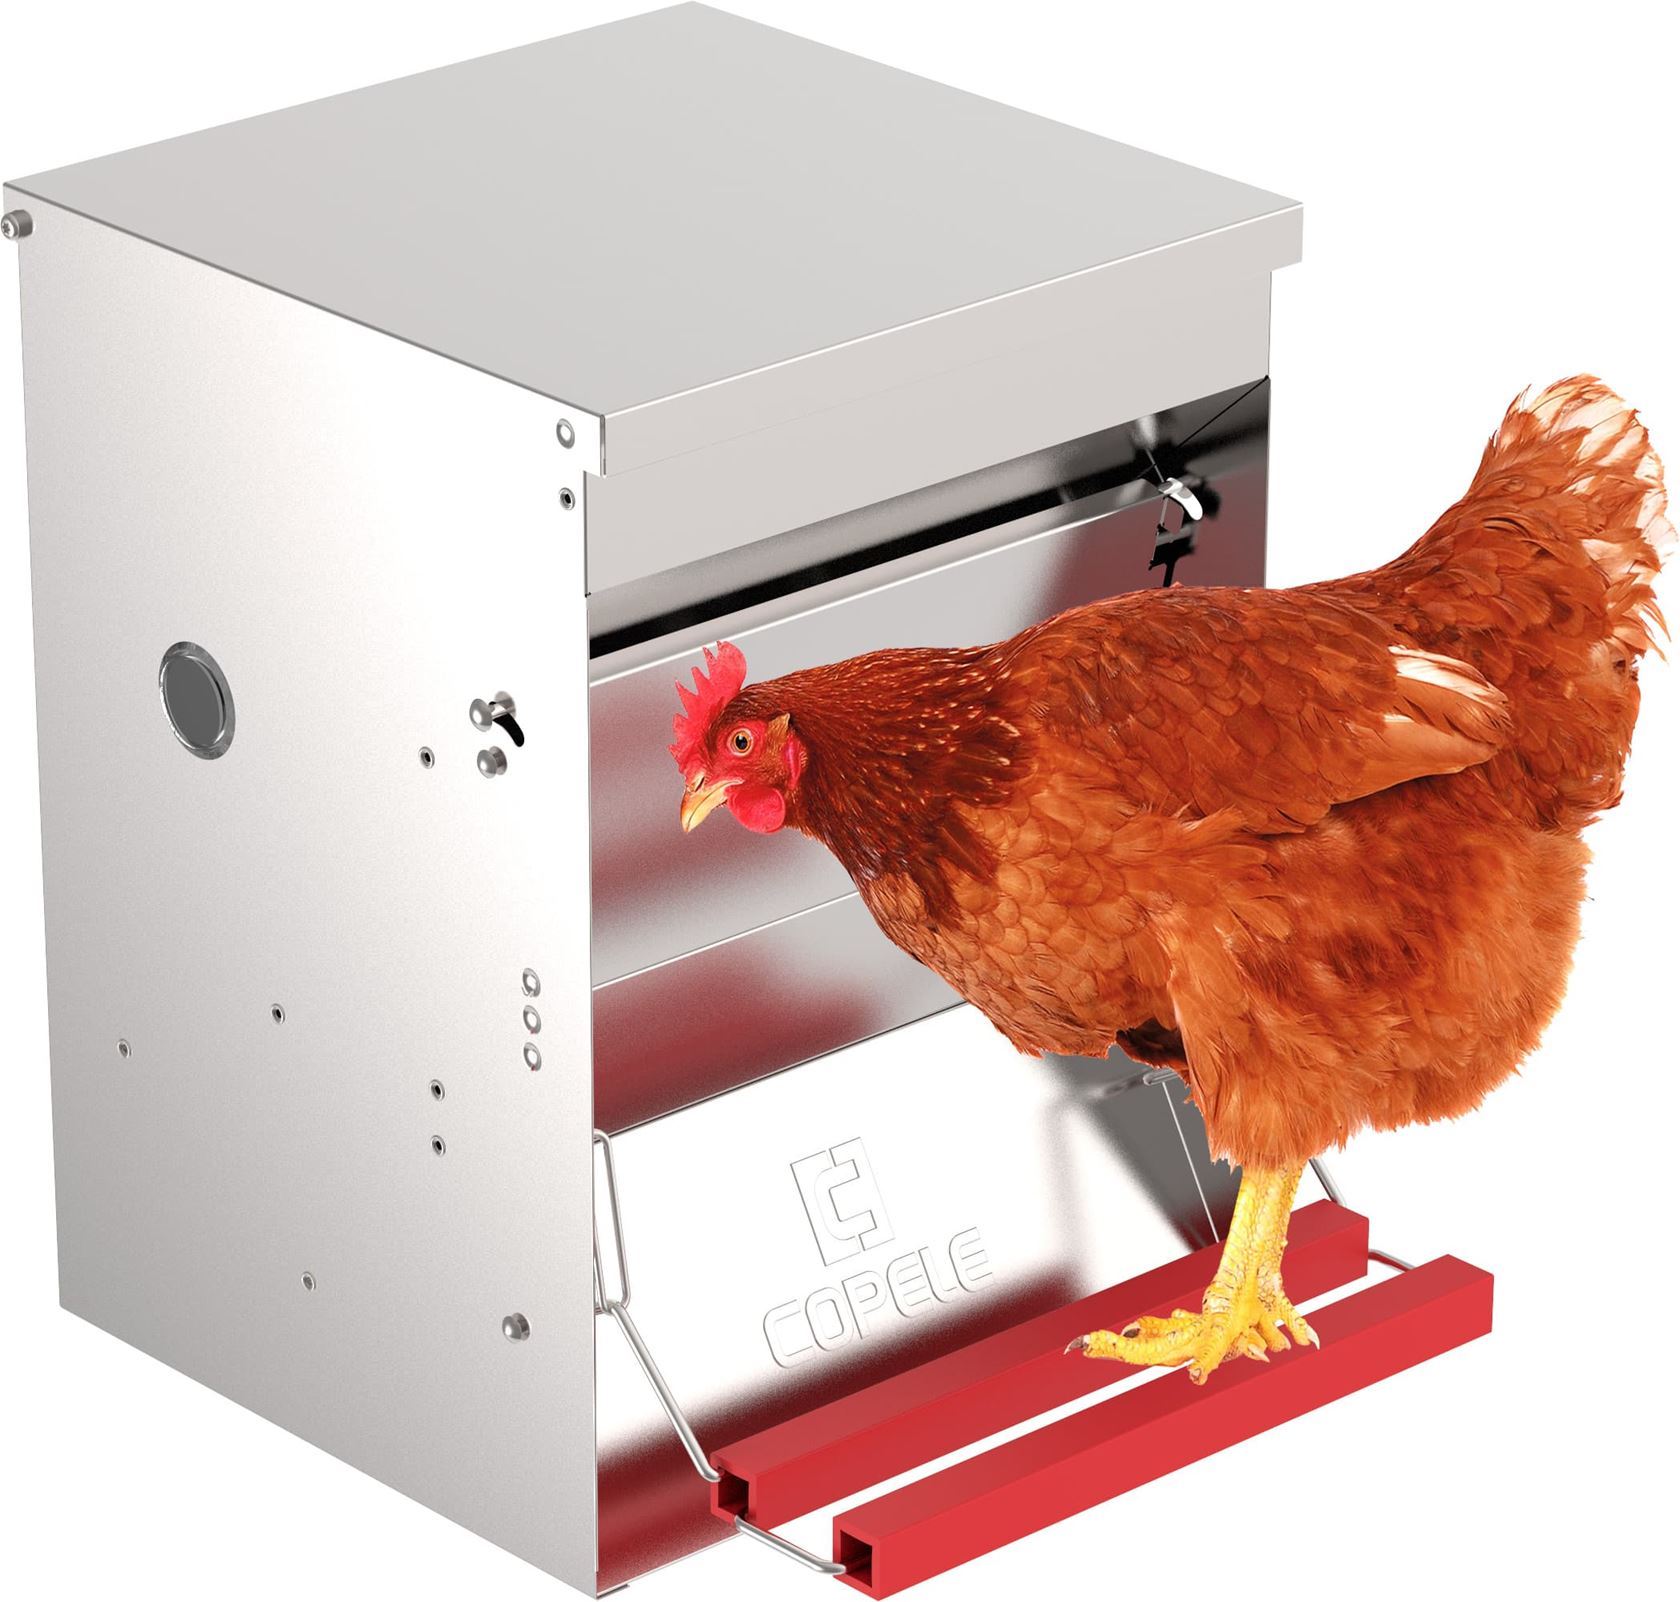 Automatische-trapbak-voederbak-voor-kippen-40kg-50x30x60cm